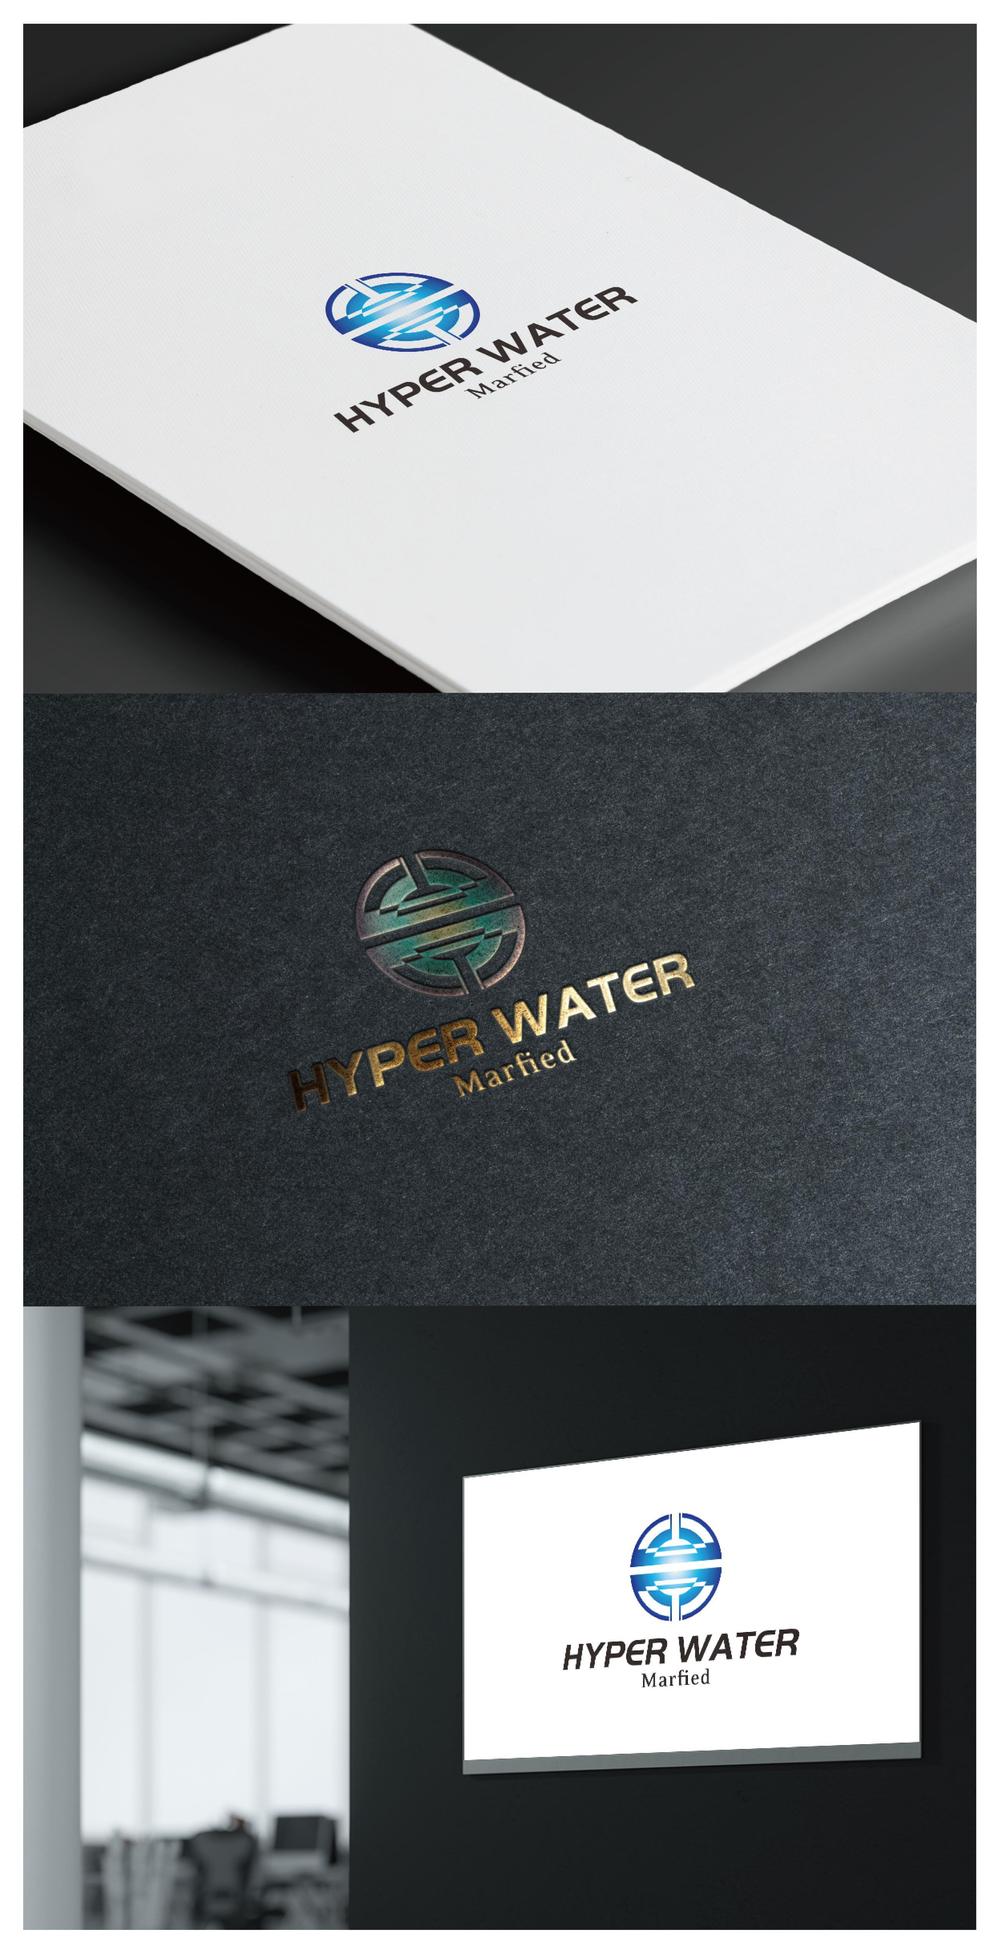 HYPER WATER_logo02_01.jpg